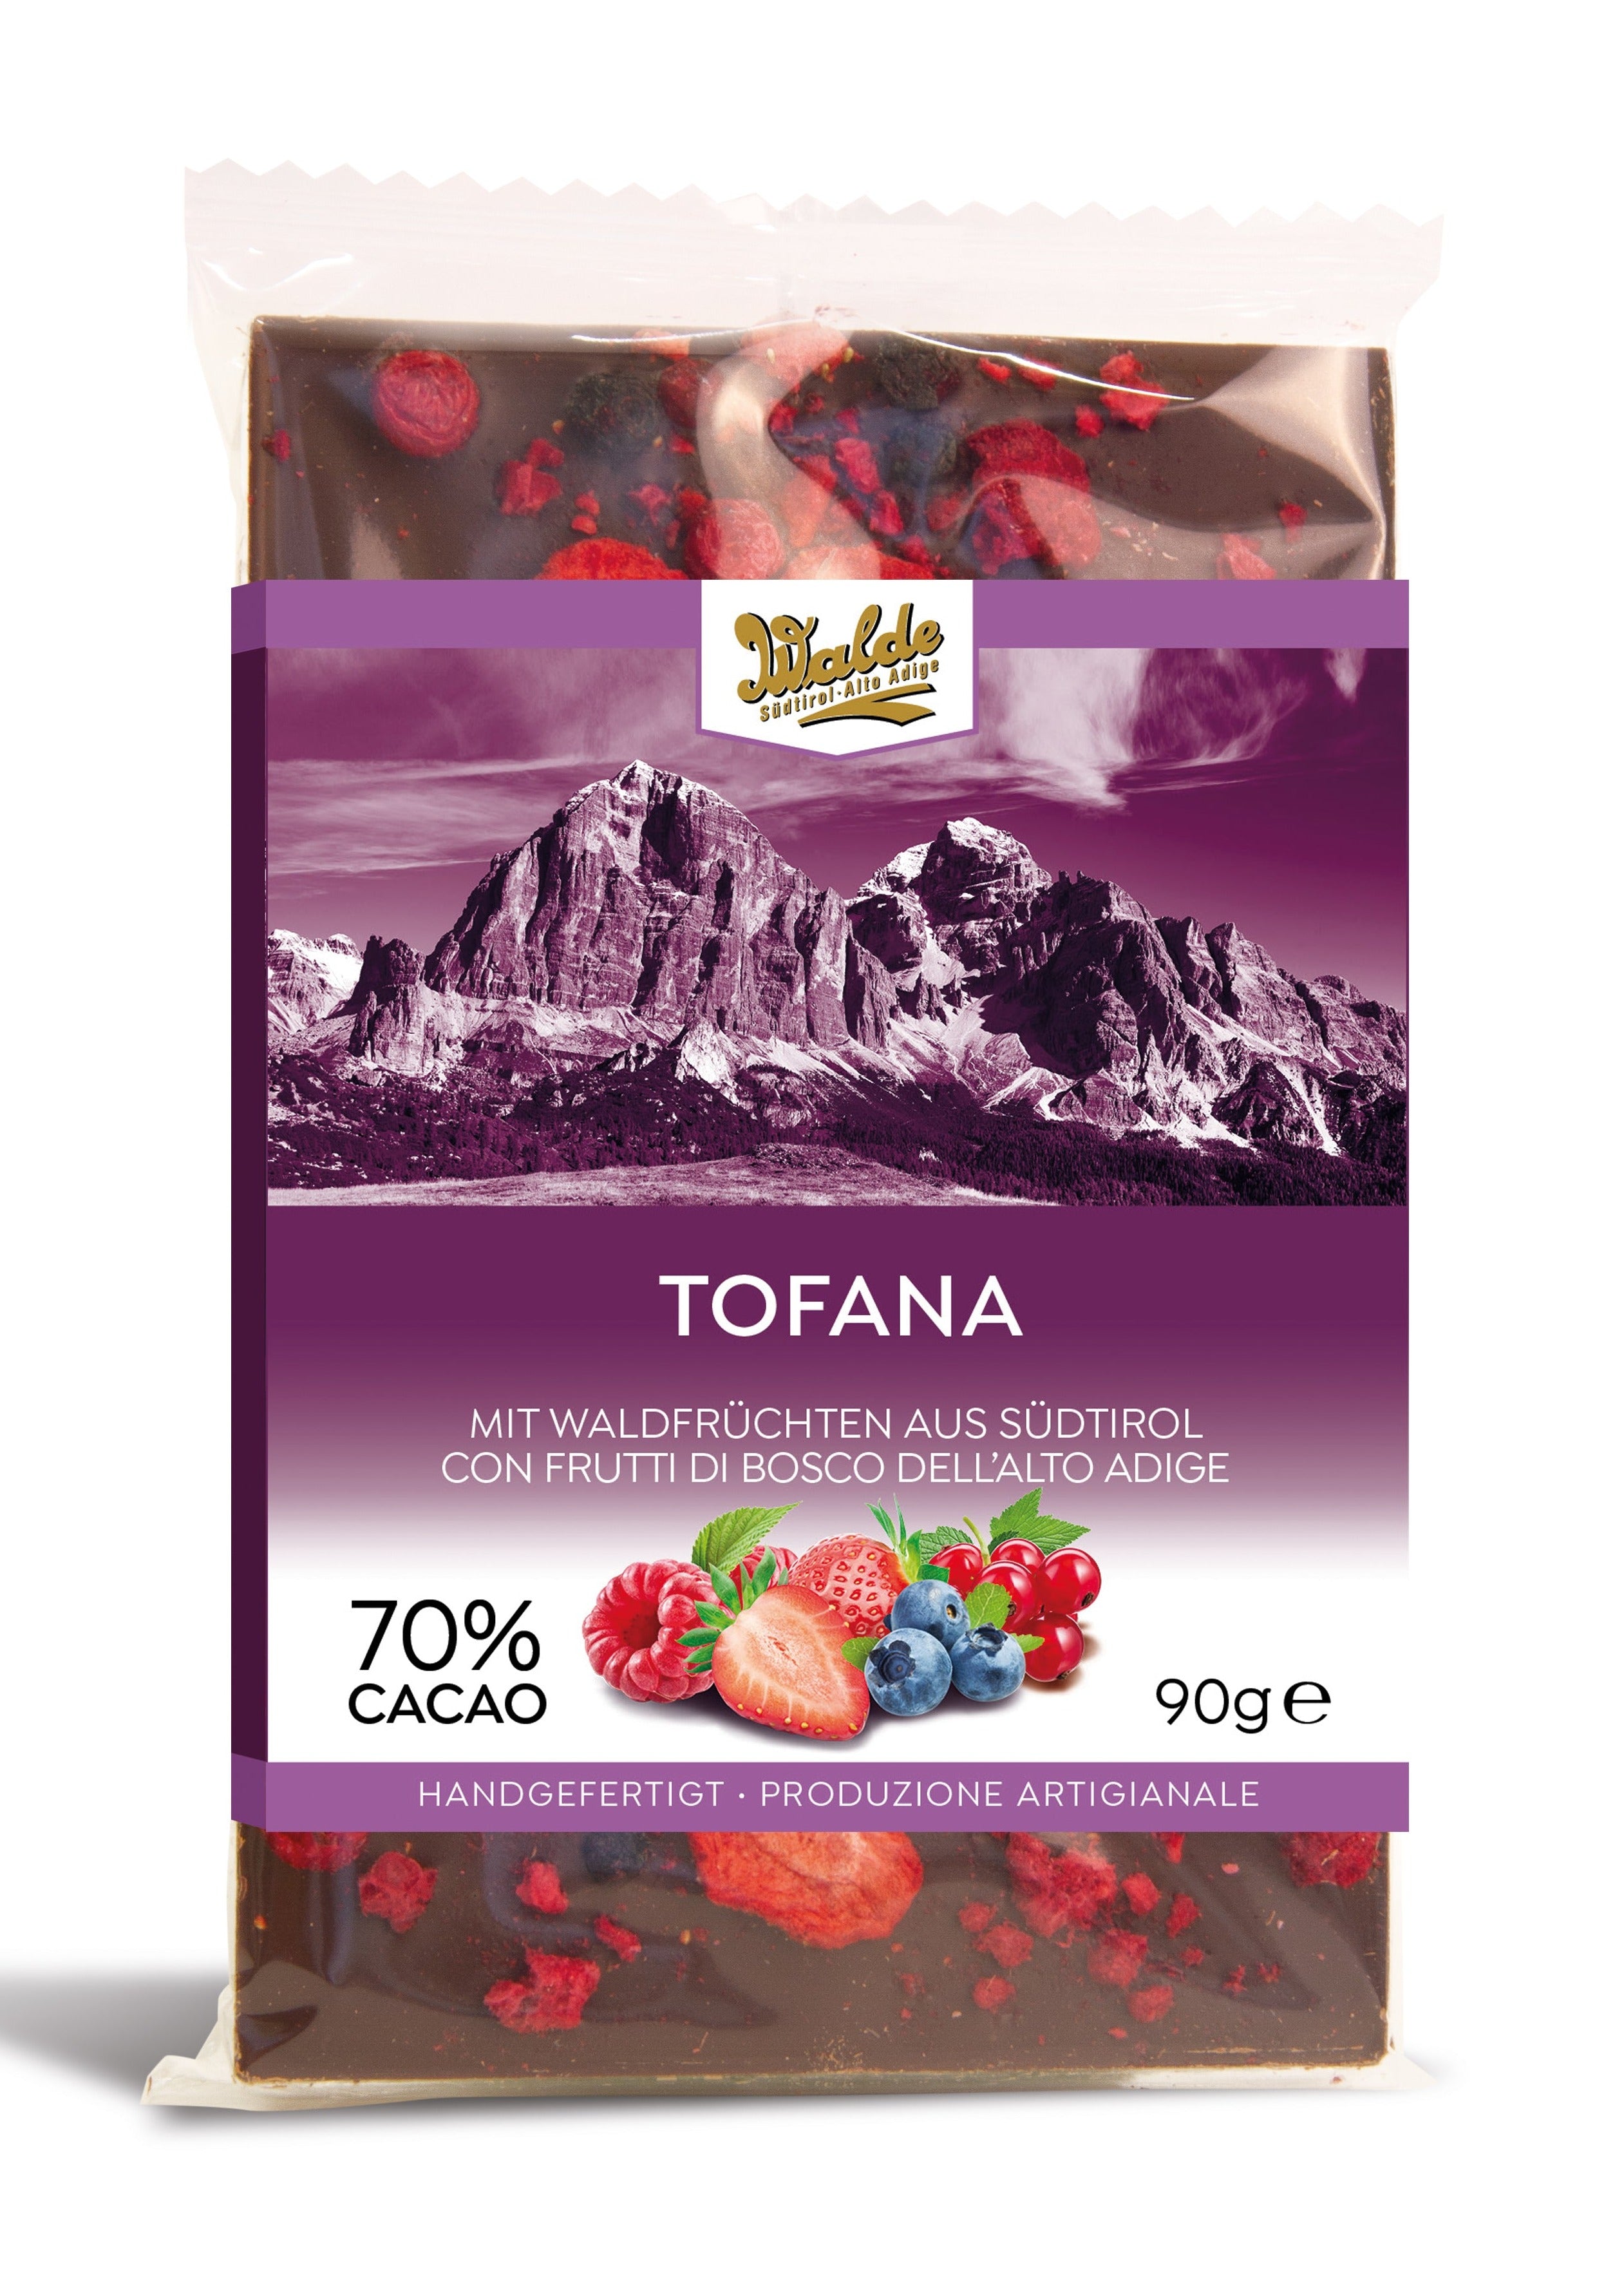 TOFANA - Zartherbe Schokolade mit Waldfrüchte